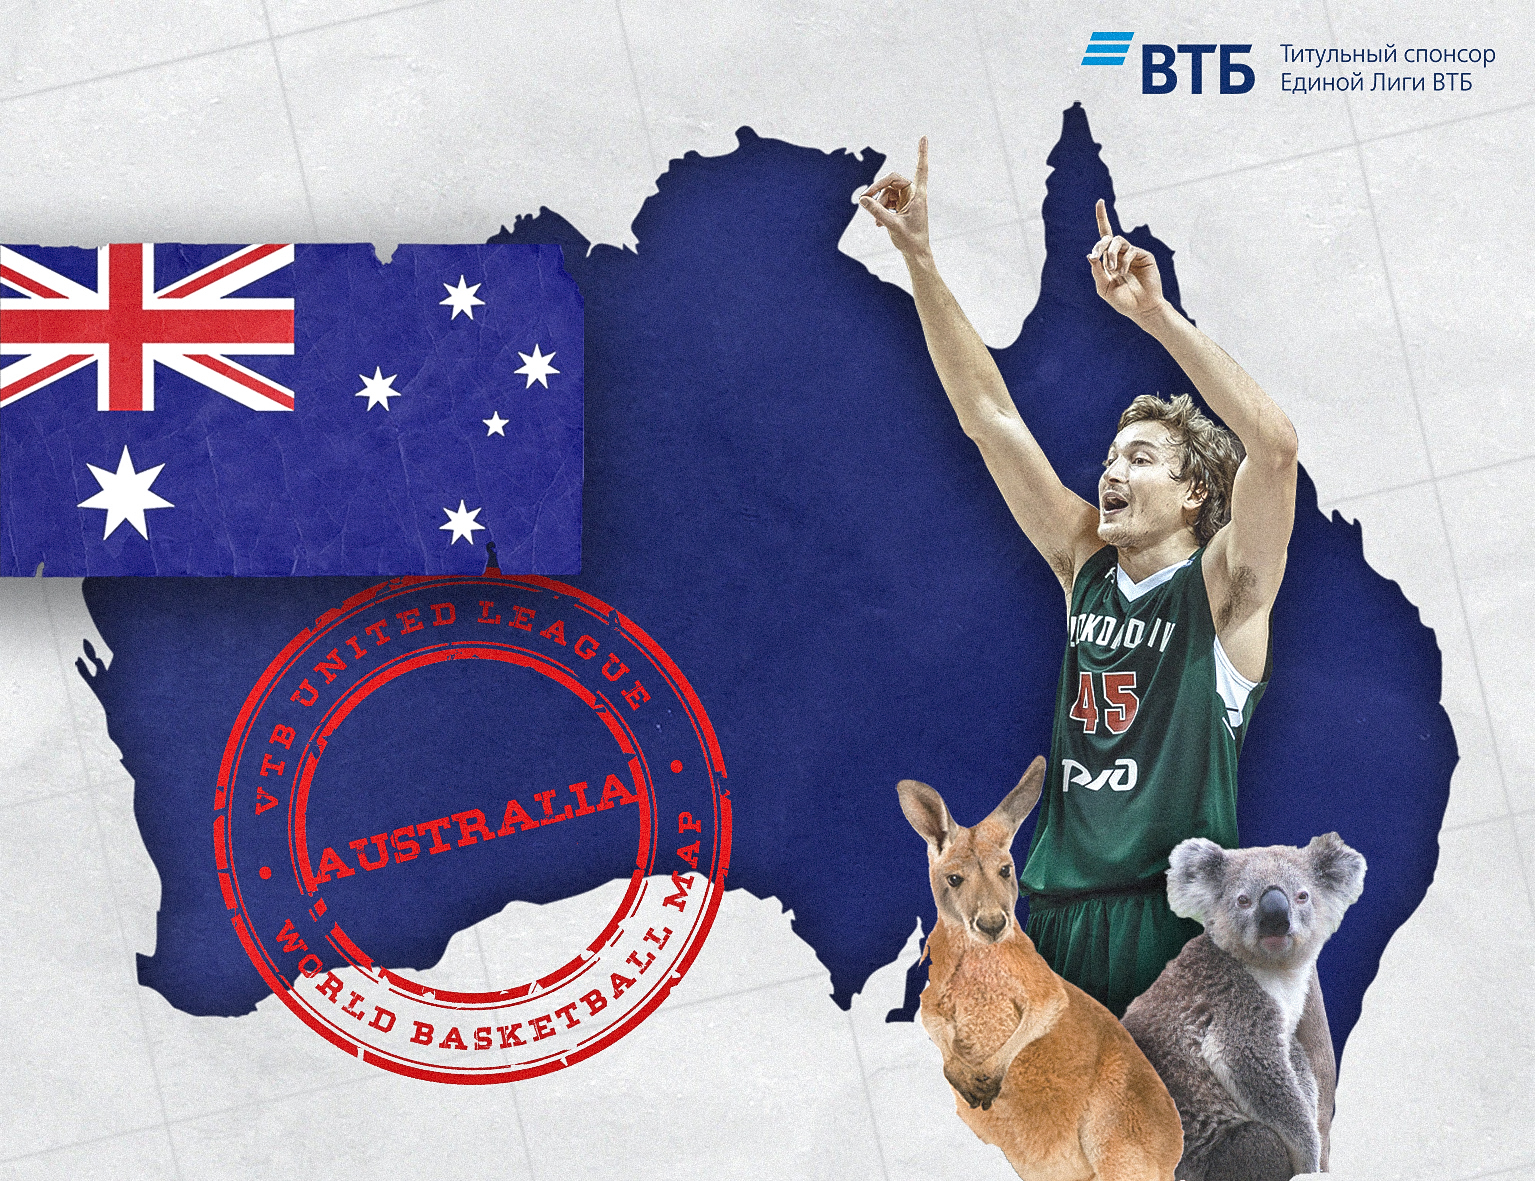 World basketball map: Australia